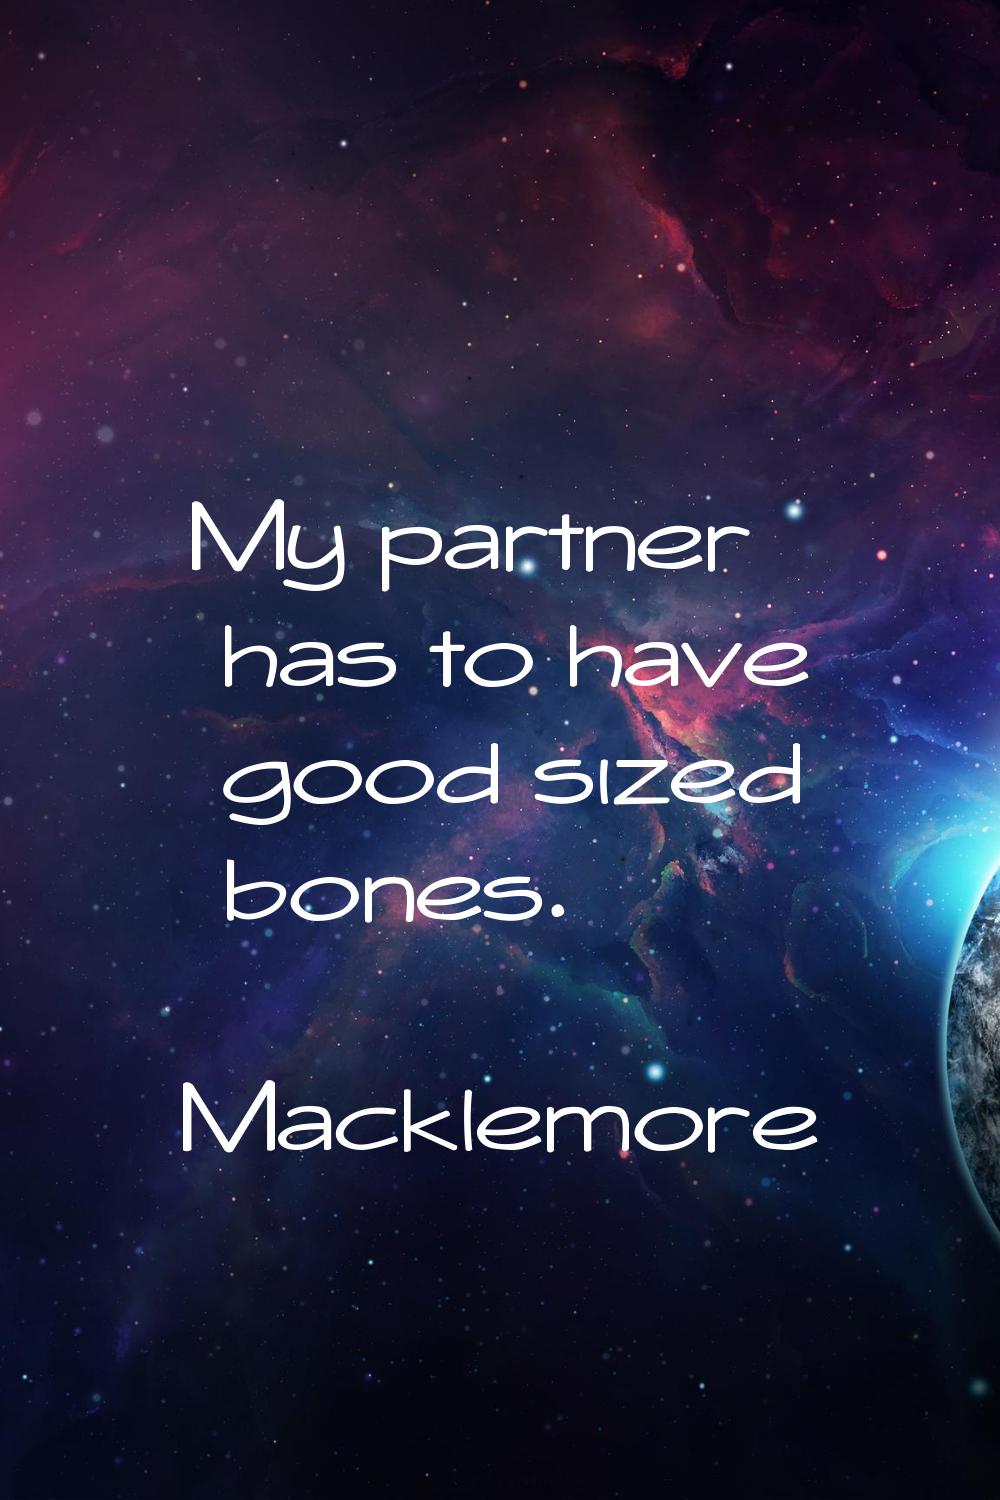 My partner has to have good sized bones.